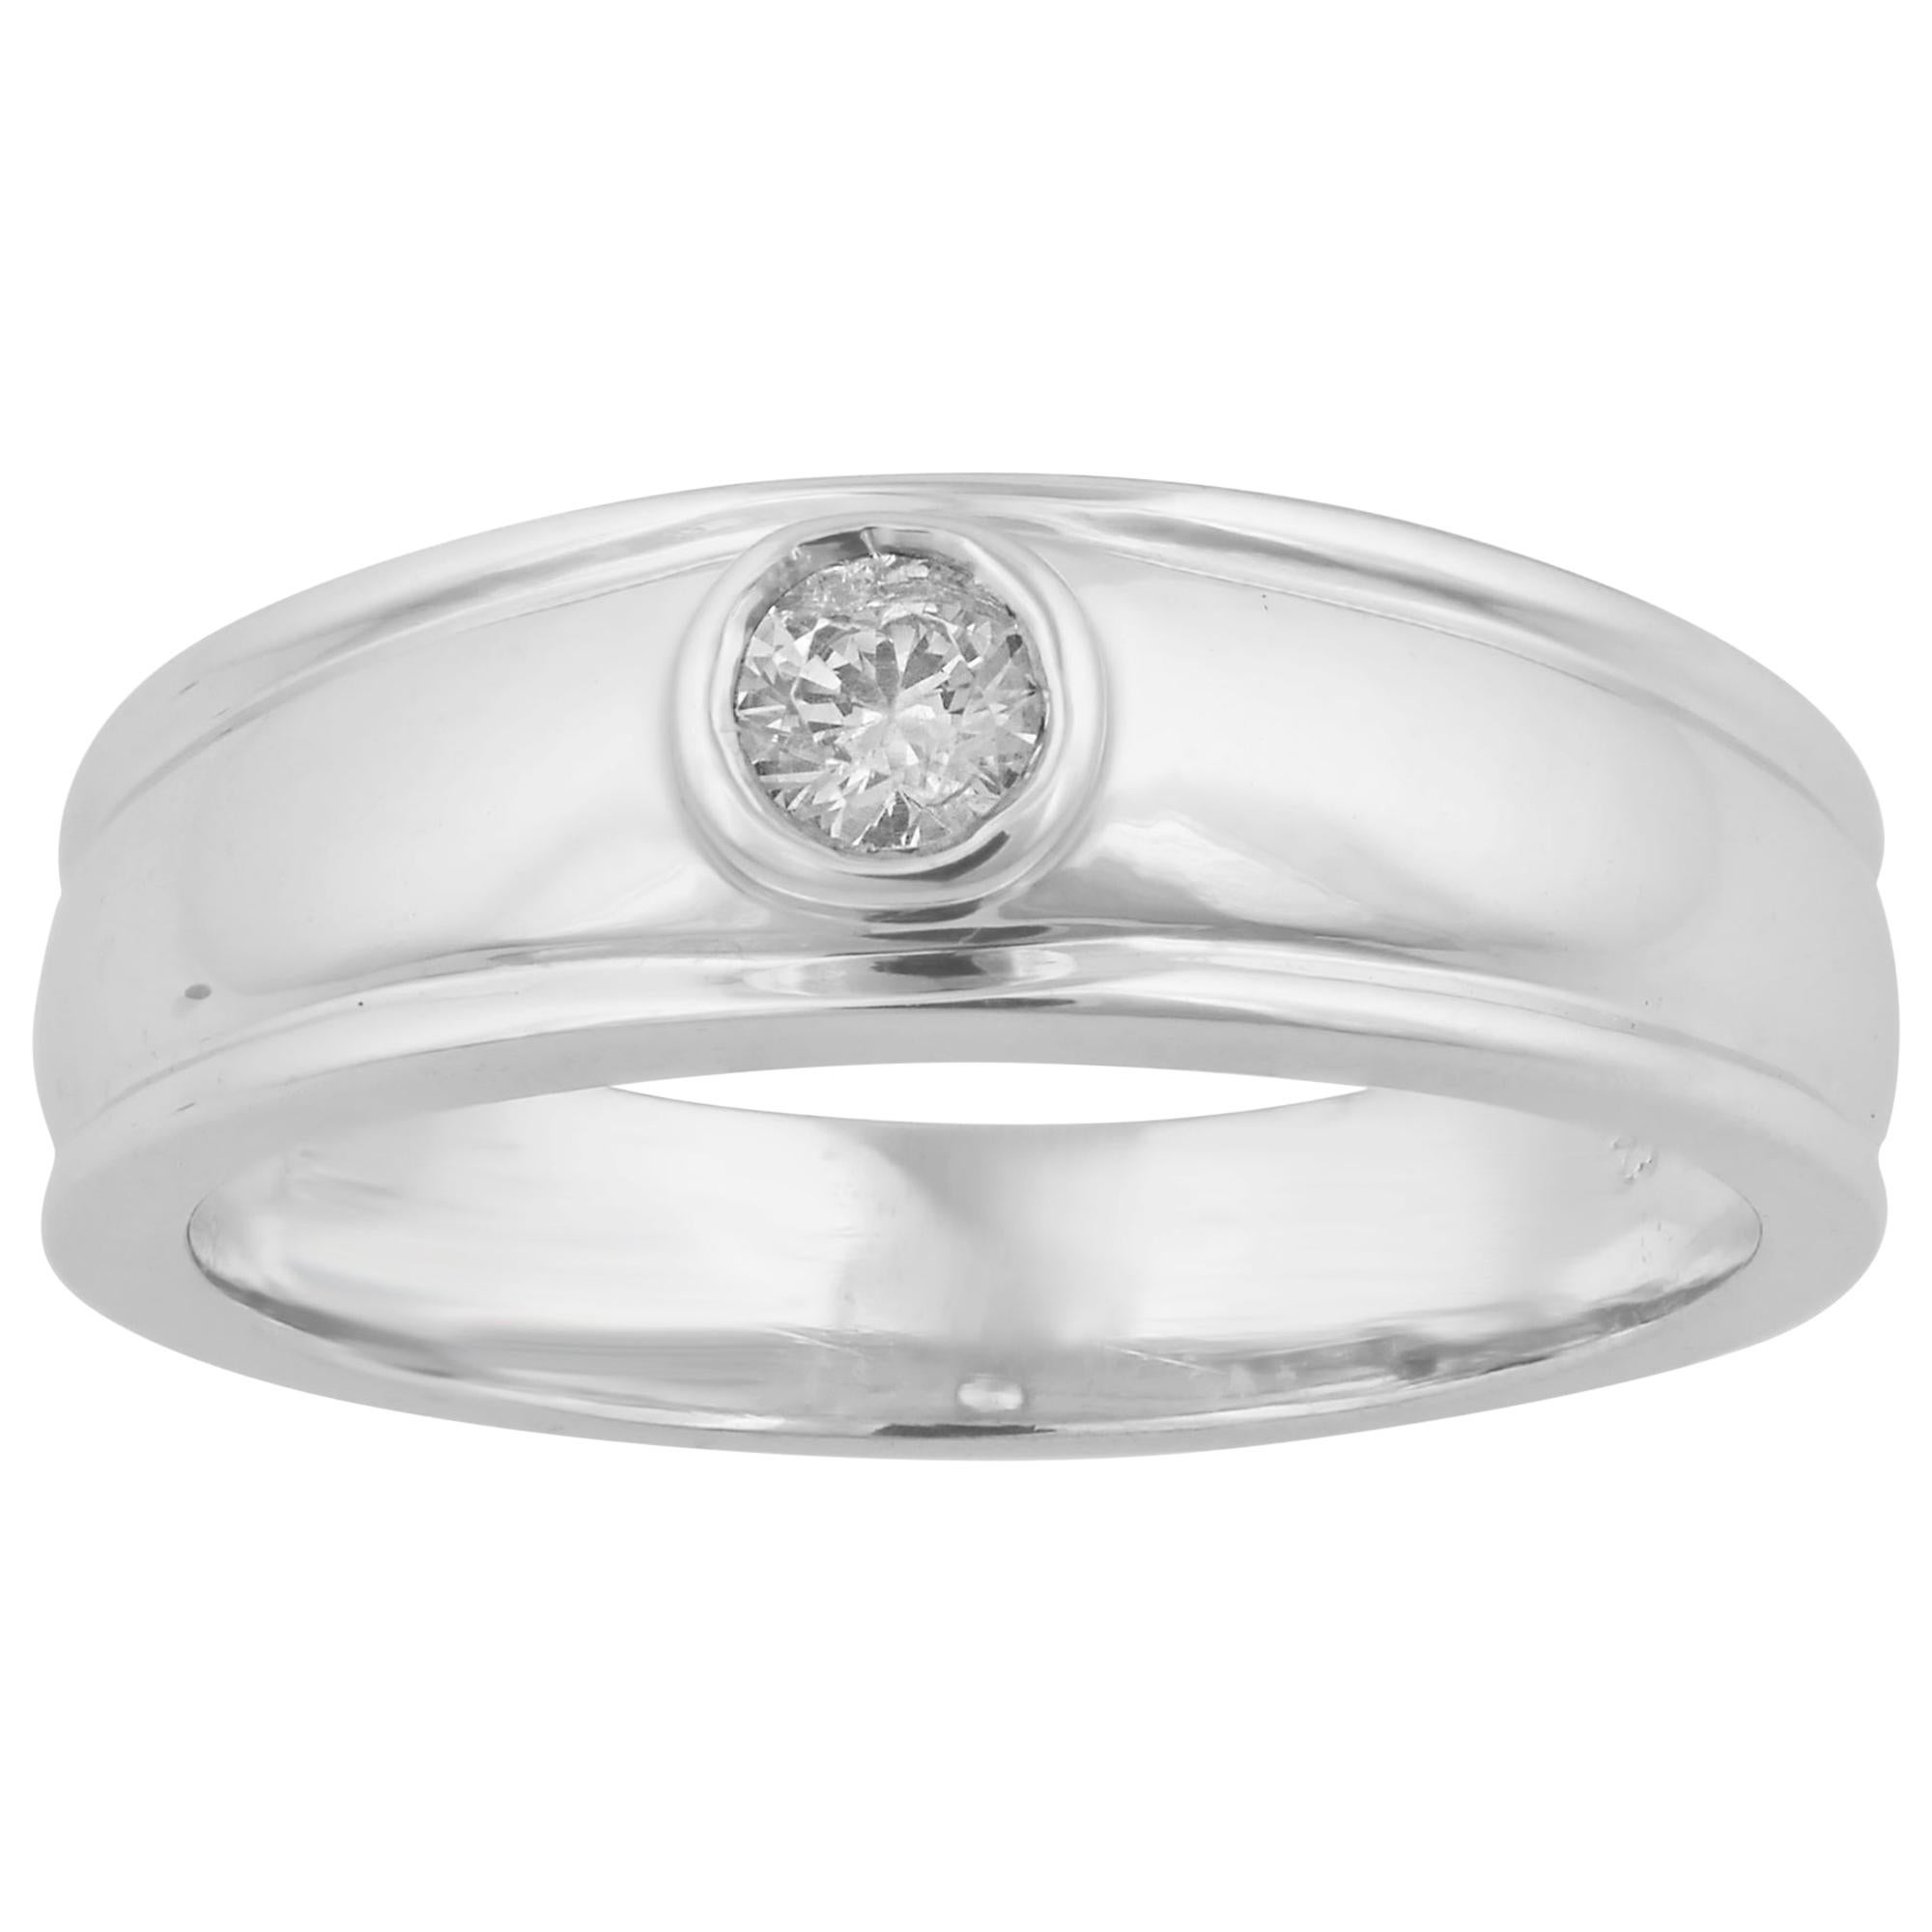 TJD 0.15 Carat Brilliant Cut Diamond 14K White Gold Bezel Set Wedding Band Ring For Sale